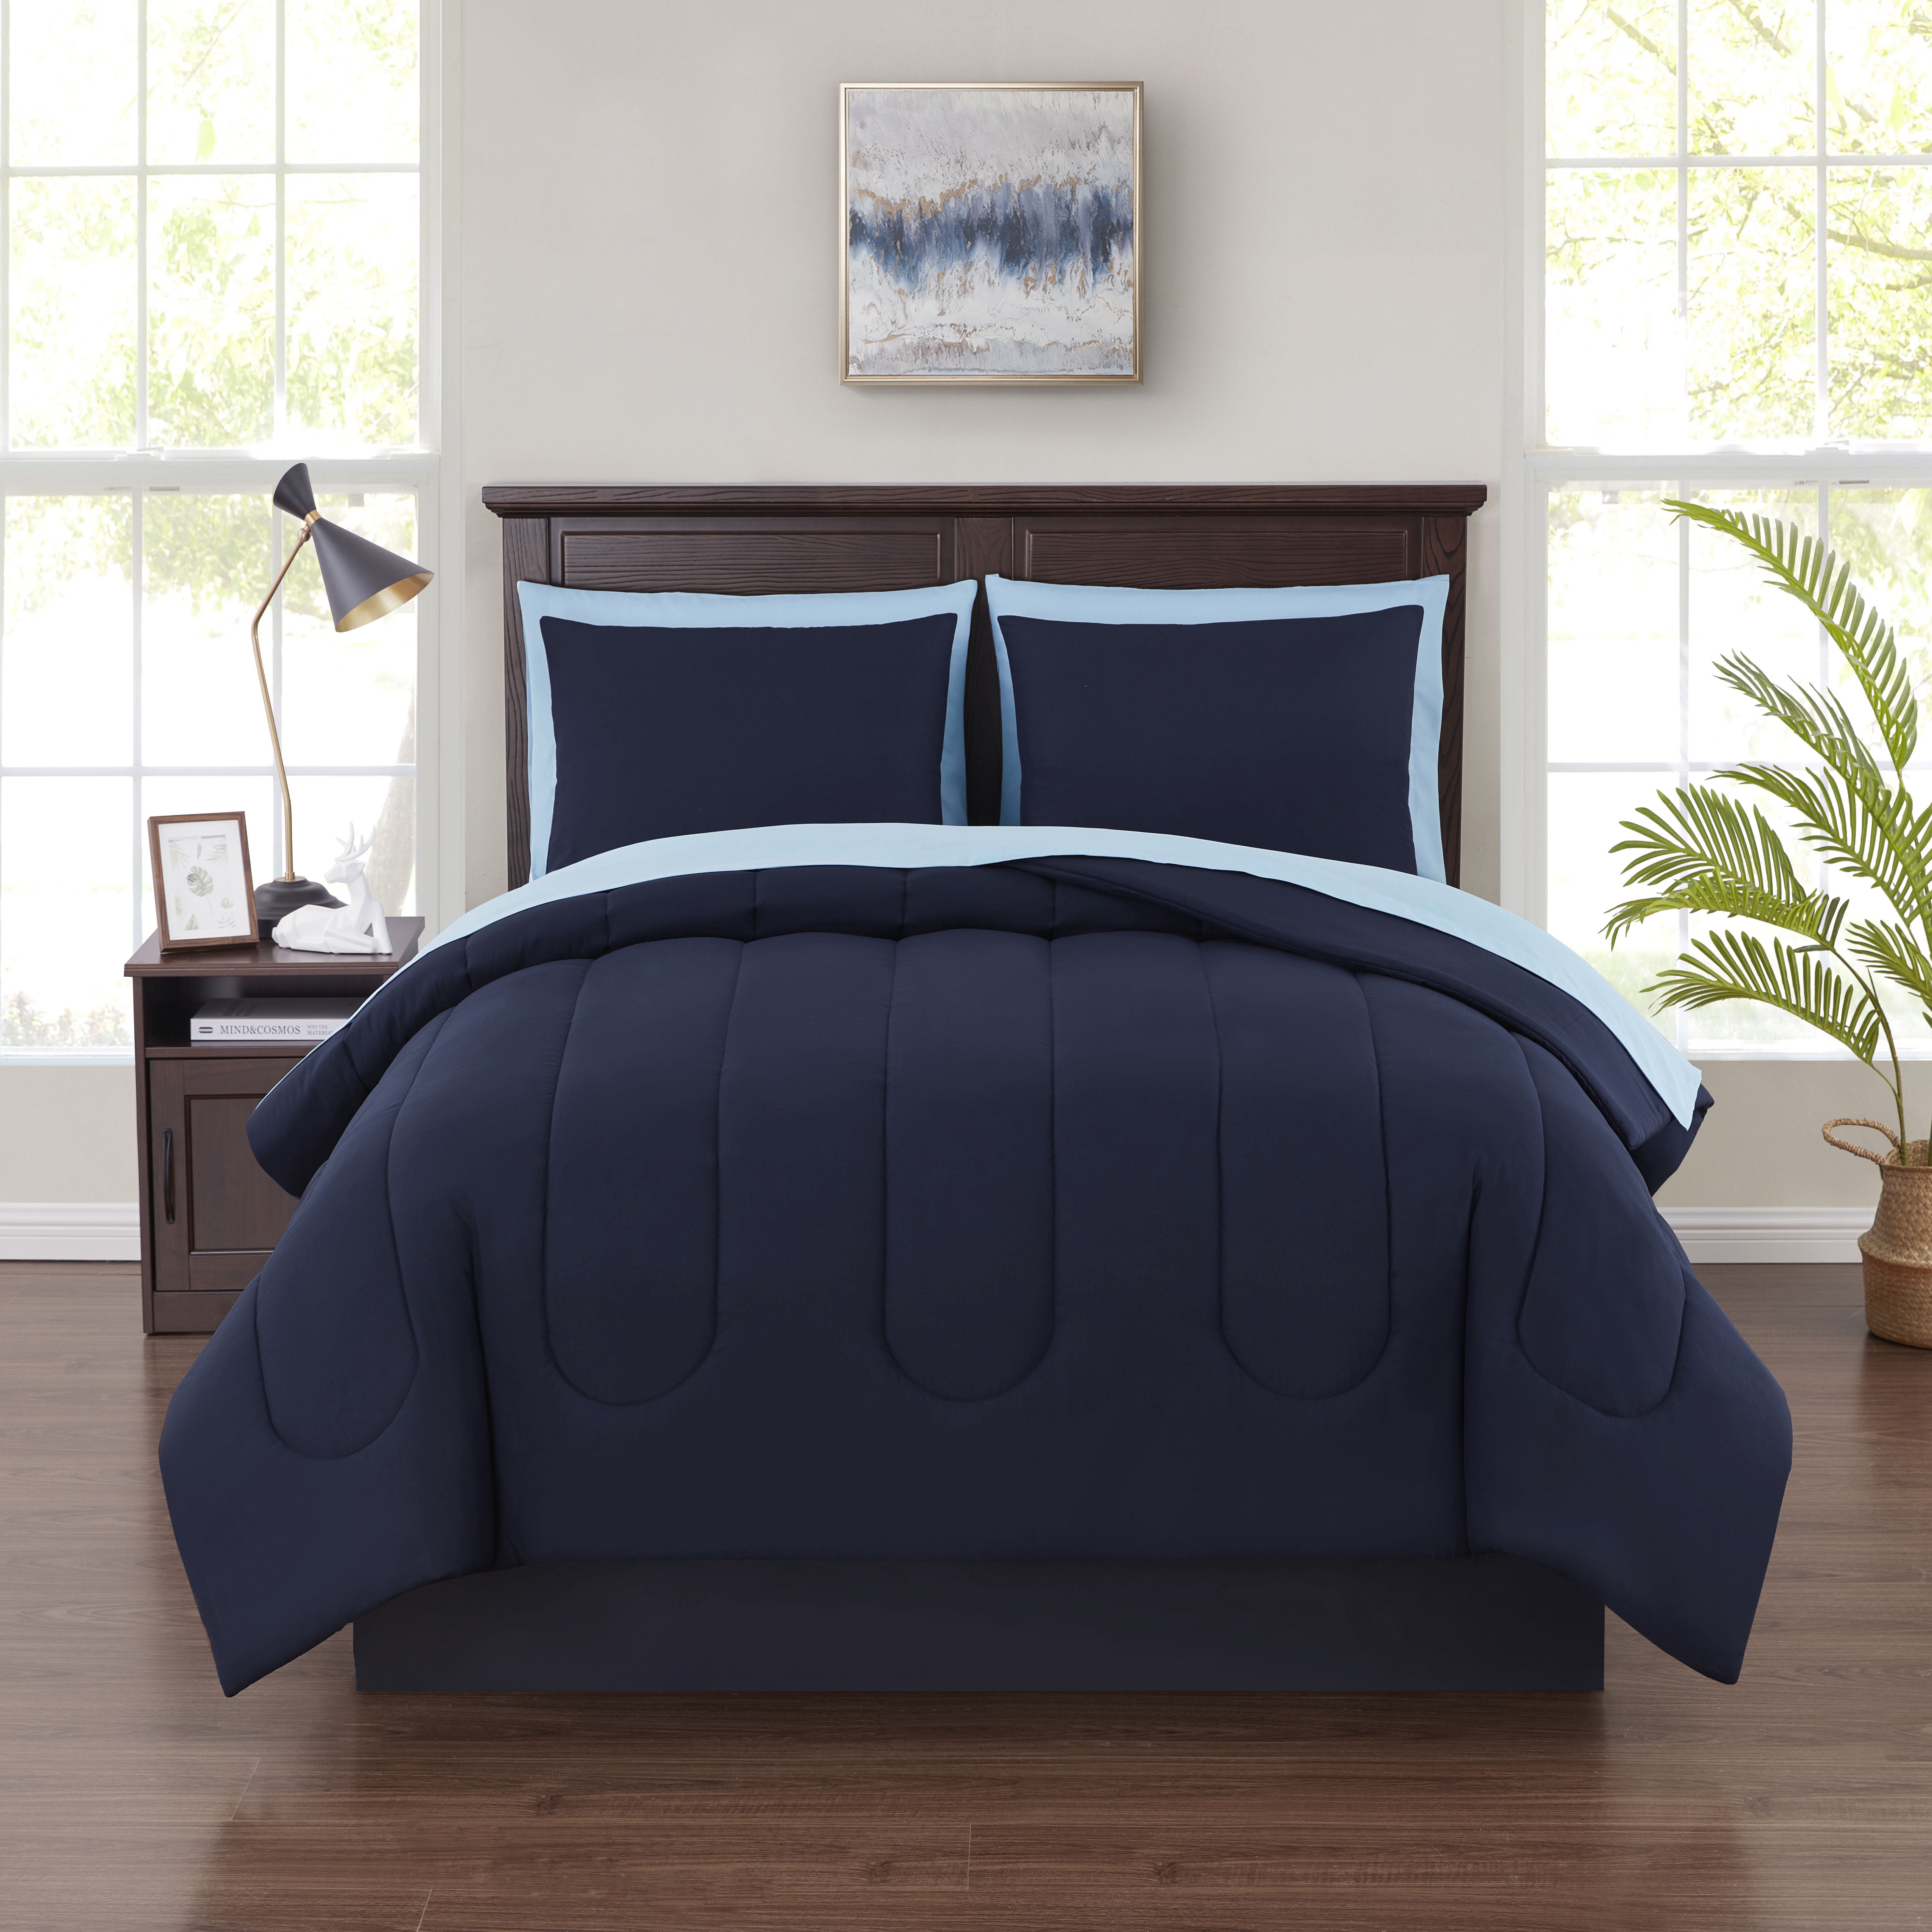 Full Size Comforter Set Blue Stripe Bed in a Bag 8 Pc Bedding Bed Sheets Shams 